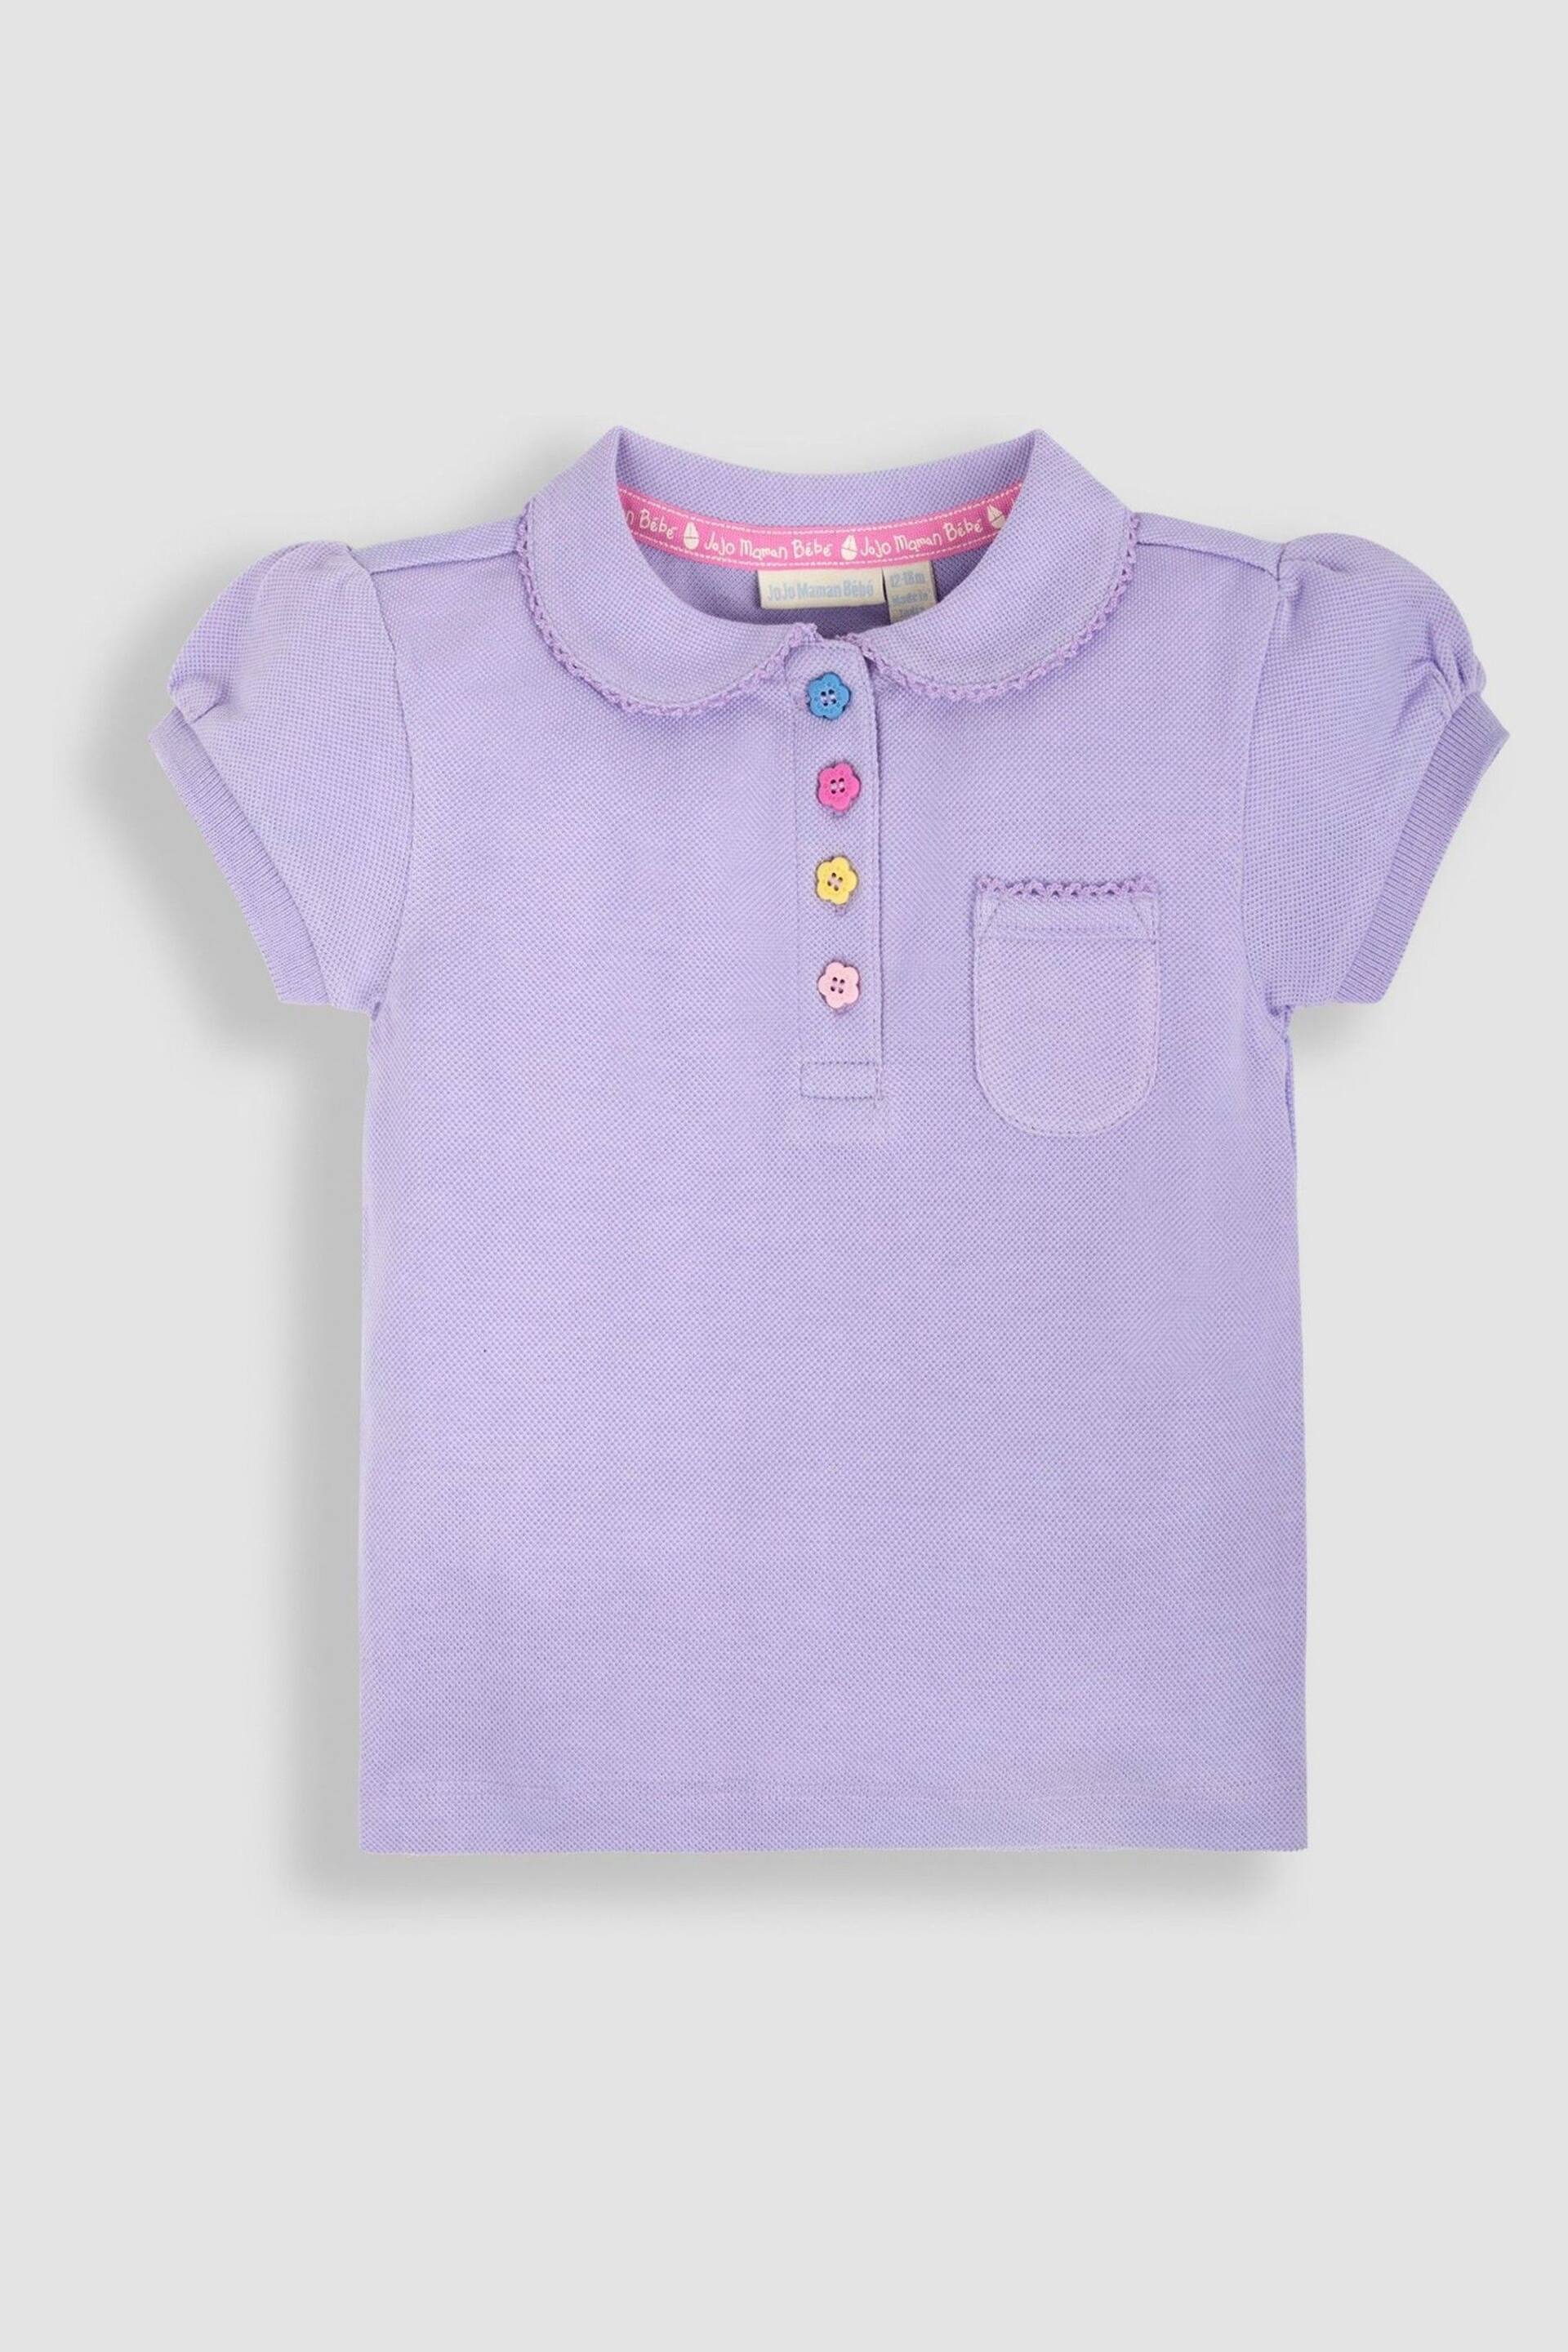 JoJo Maman Bébé Lilac Purple Pretty Polo Shirt - Image 1 of 3